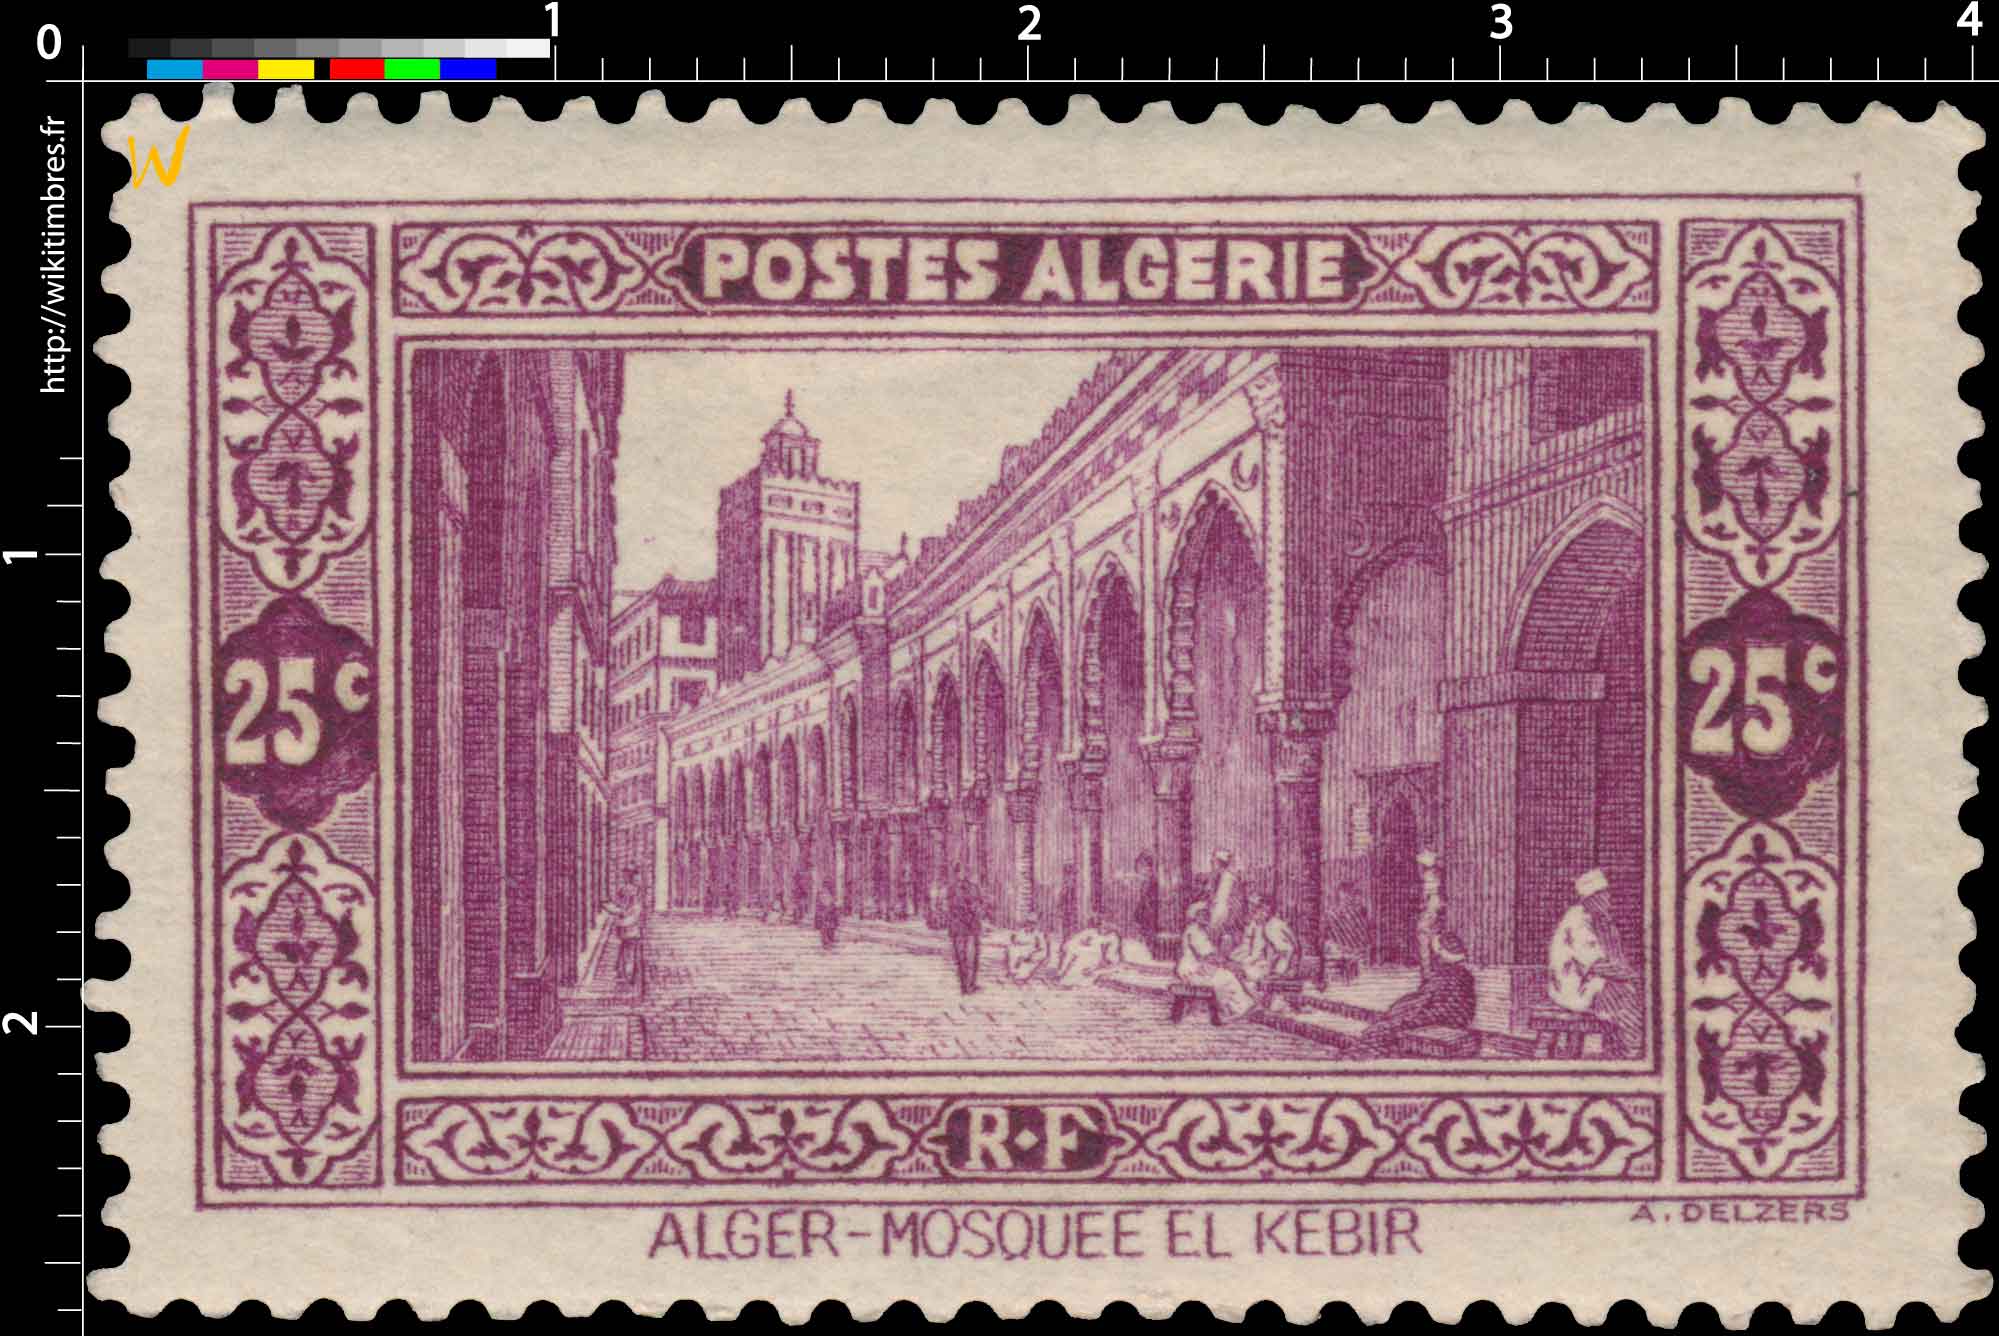 Algérie - Mosquée El Kébir